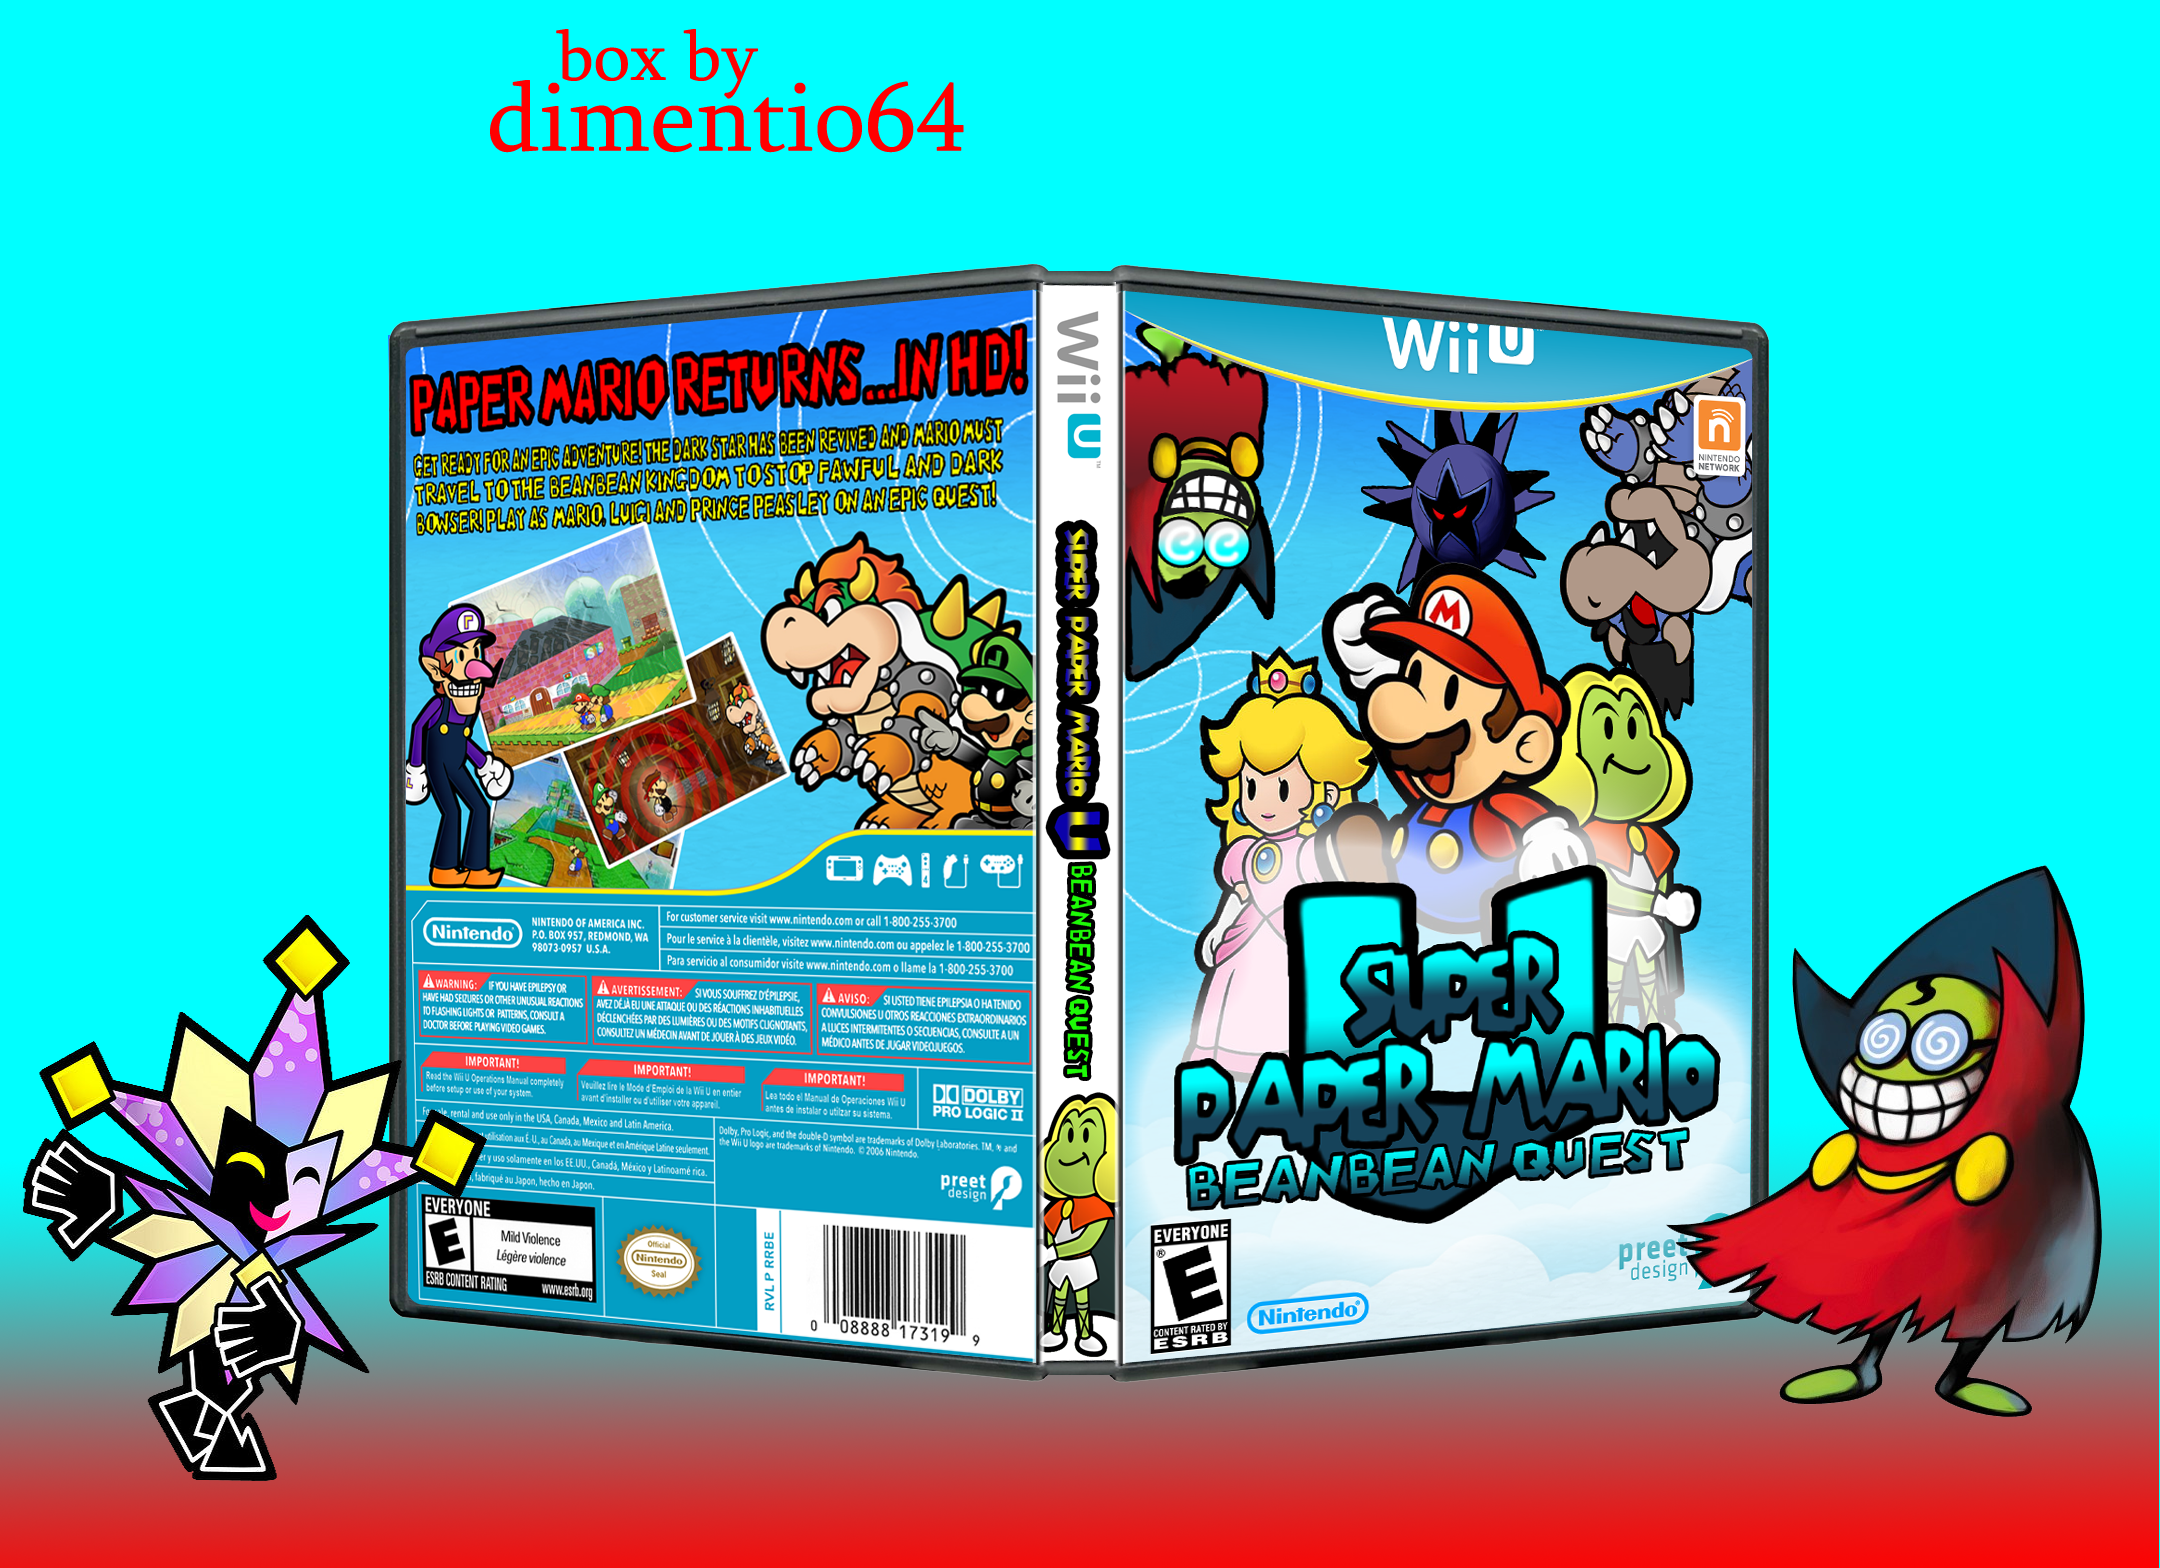 Super Paper Mario U: Beanbean Quest box cover